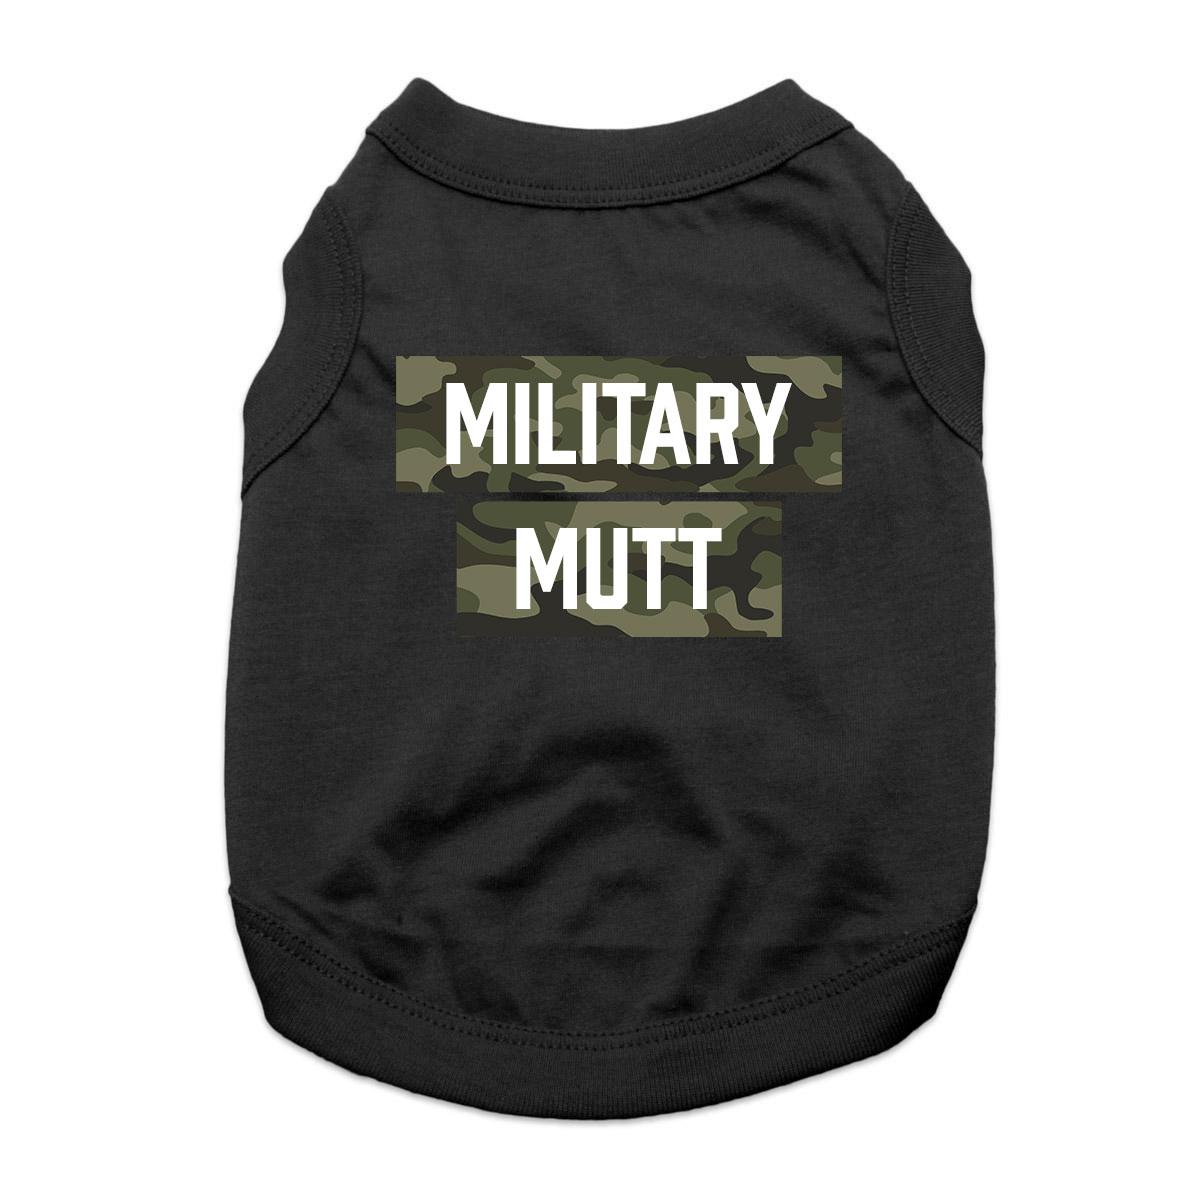 Military Mutt Dog Shirt - Black